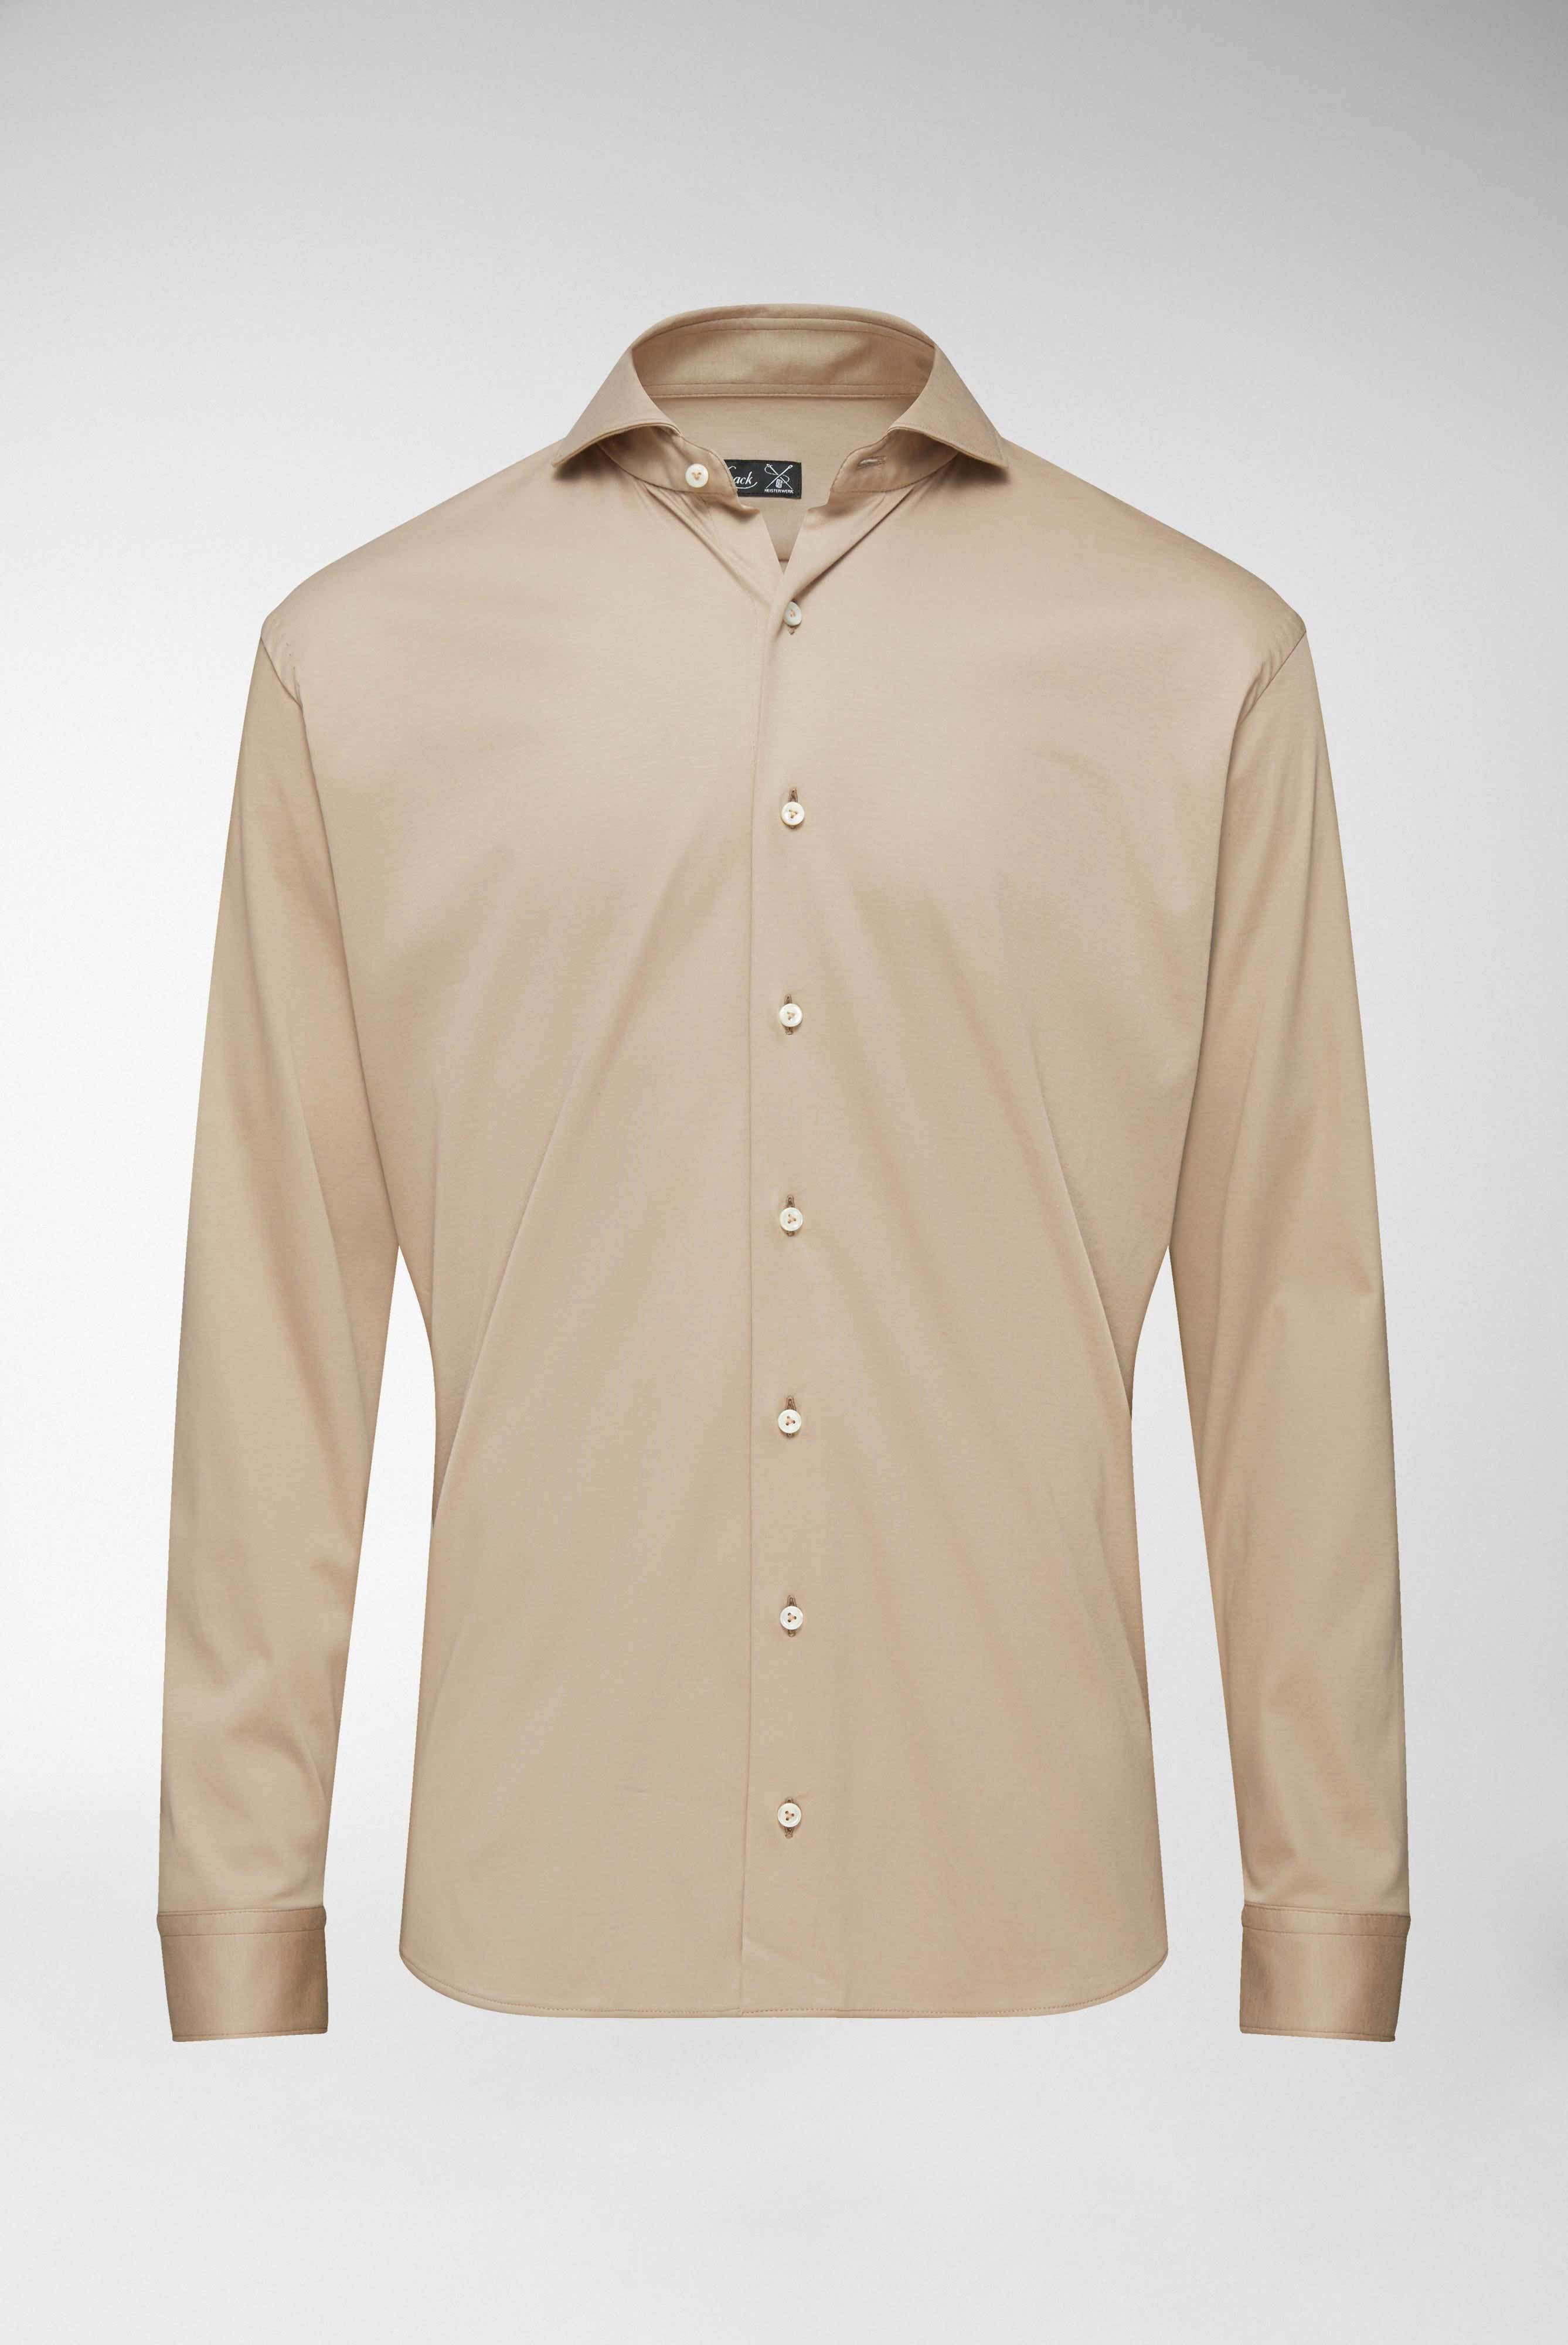 Casual Hemden+Jersey Hemd aus Schweizer Baumwolle Tailor Fit+20.1683.UC.180031.140.X4L